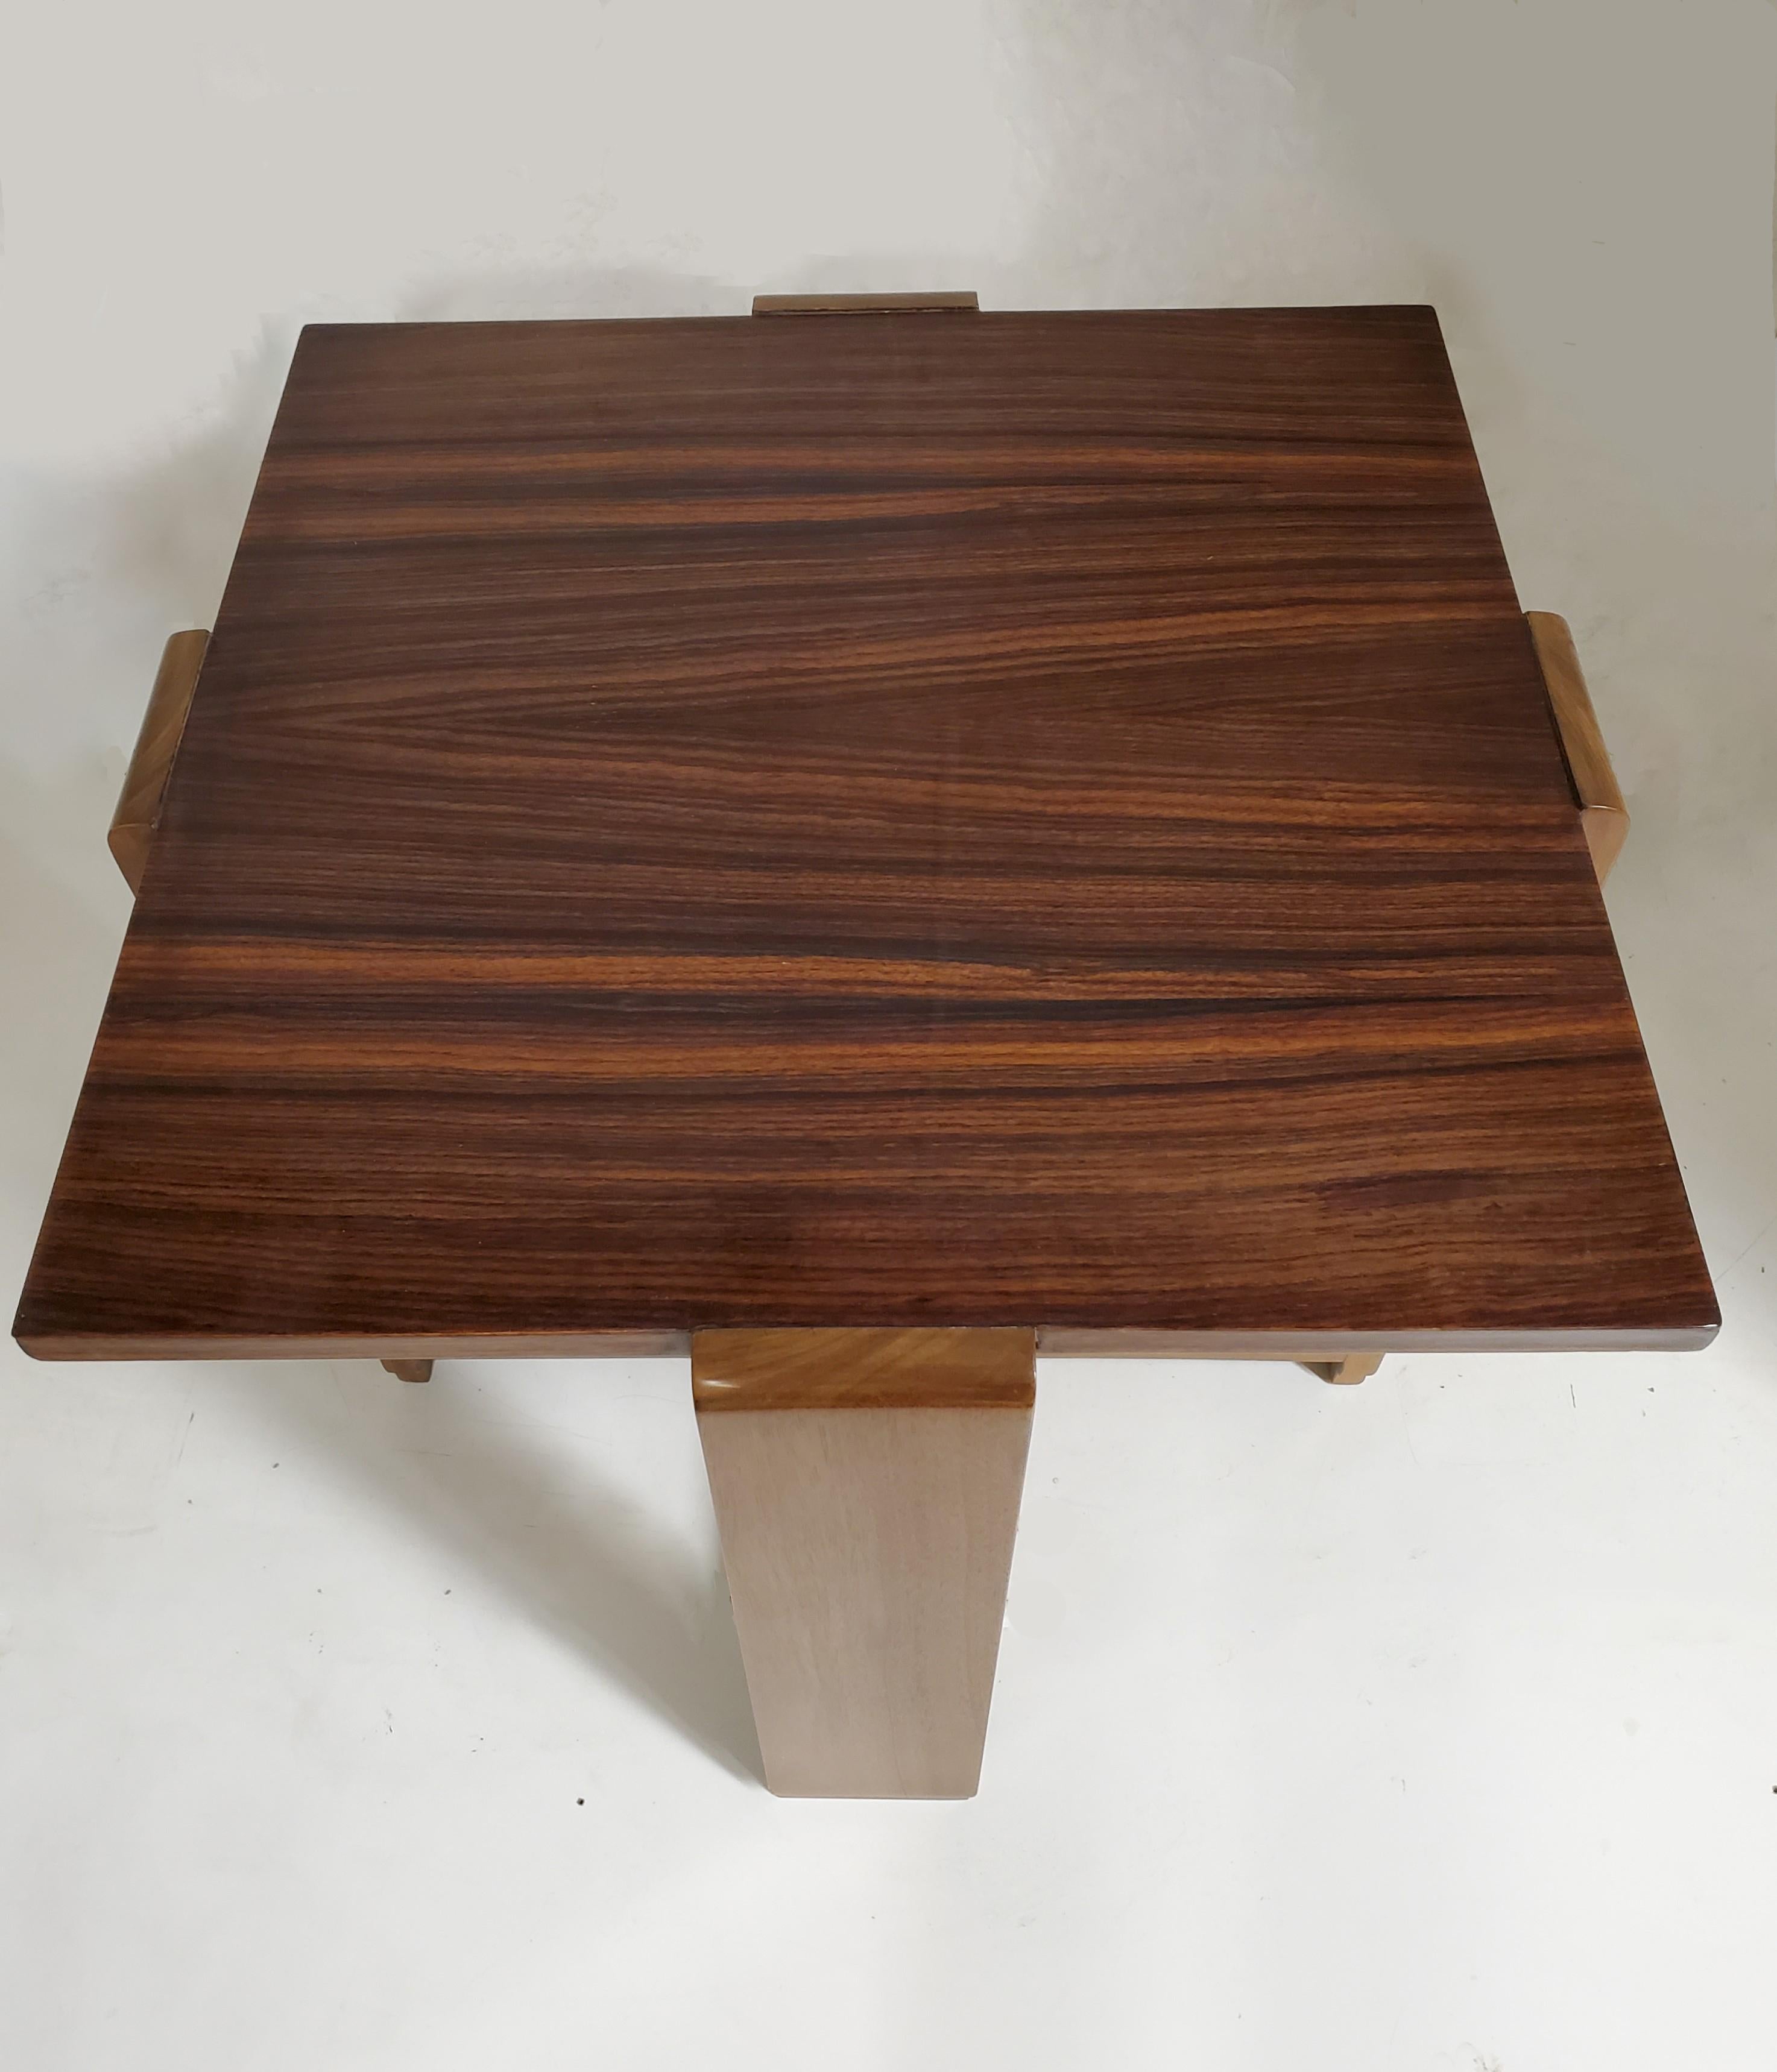 Original French Art Deco Macassar Ebony Square Table, Michel Roux-Spitz For Sale 5